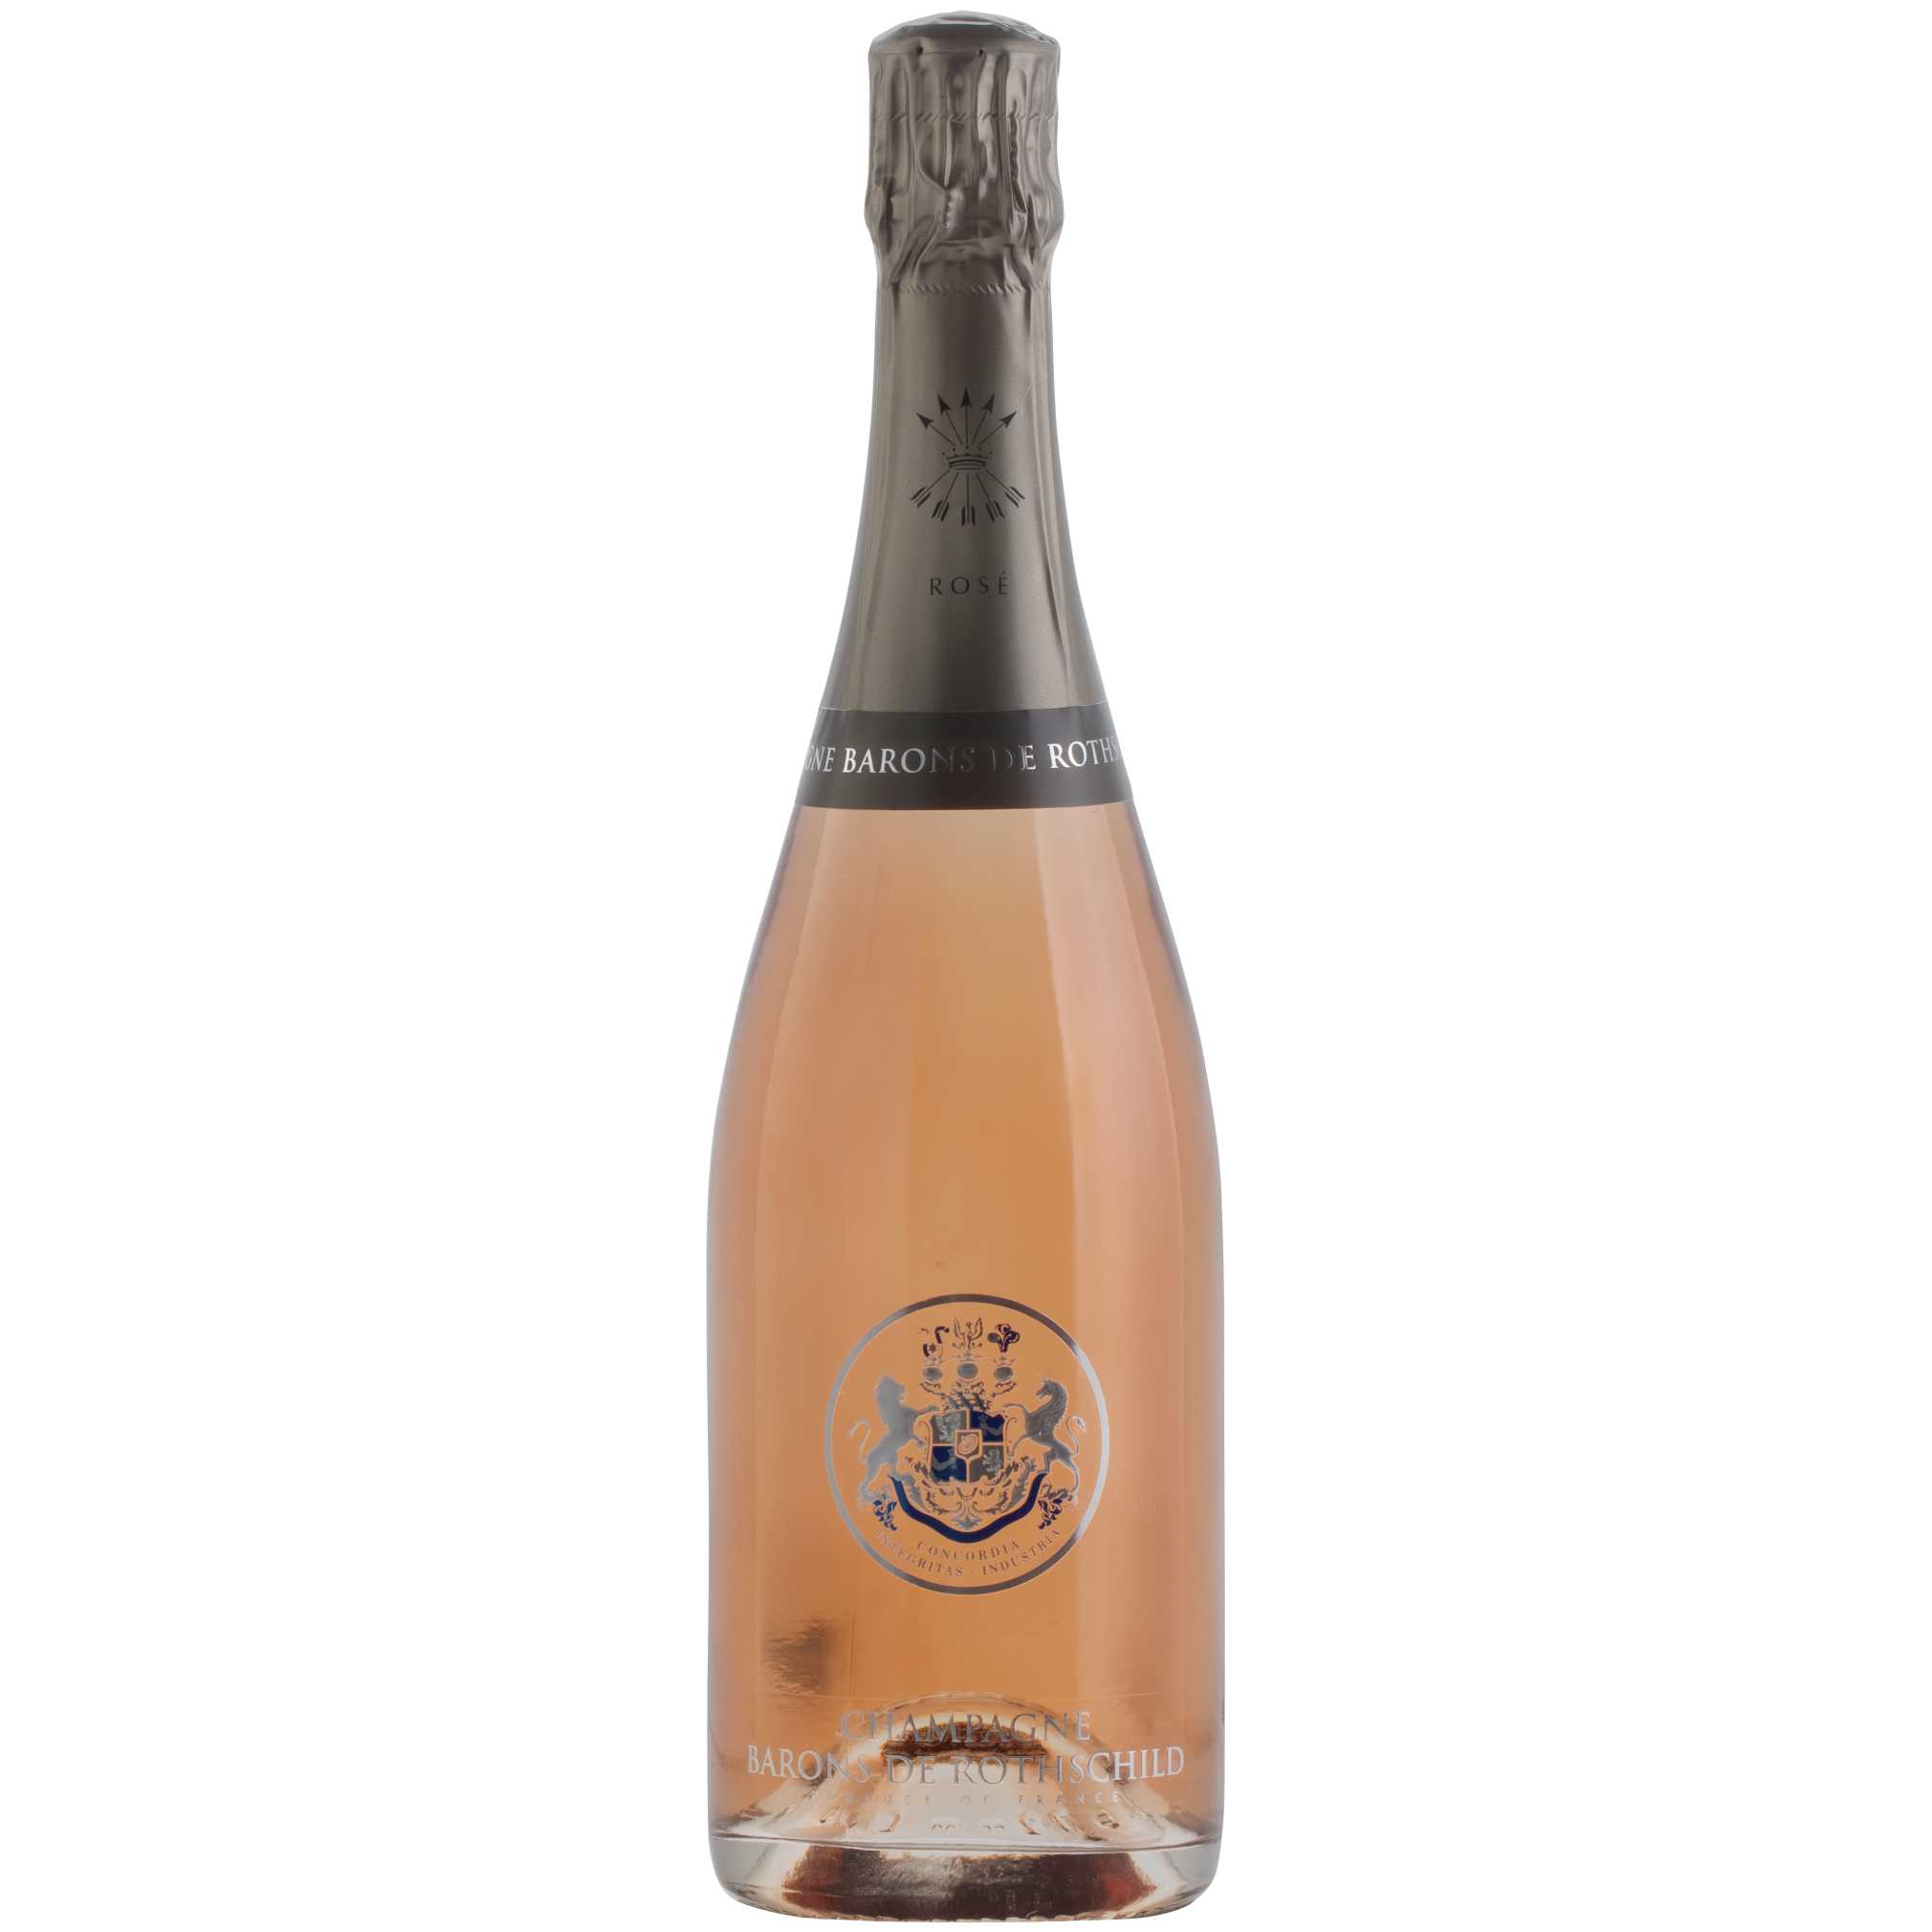 Barons De Rothschild Brut Champagne Rose - A Kosher Wine From France